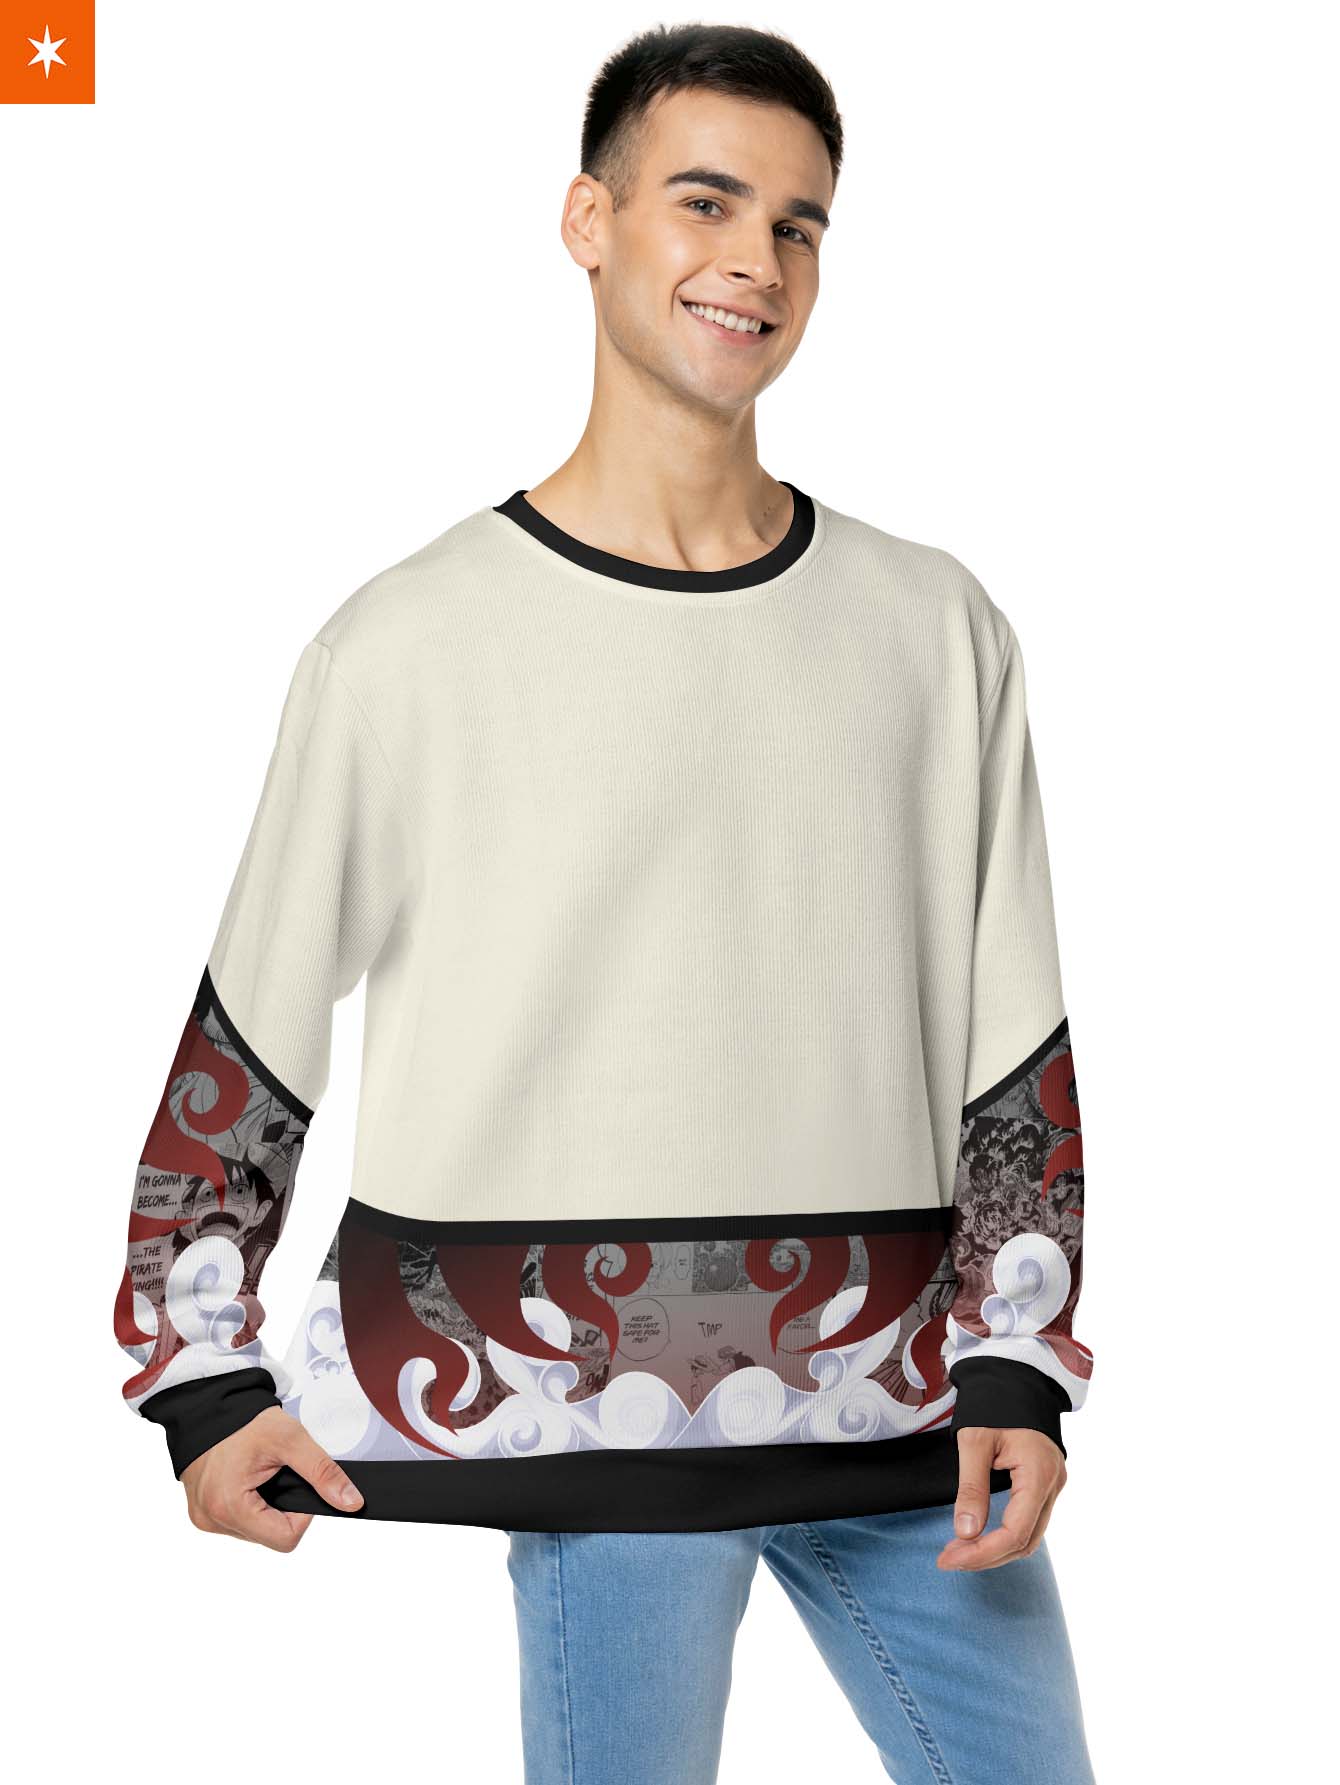 Fandomaniax - [Buy 1 Get 1 SALE] Captain Sheath Unisex Wool Sweater